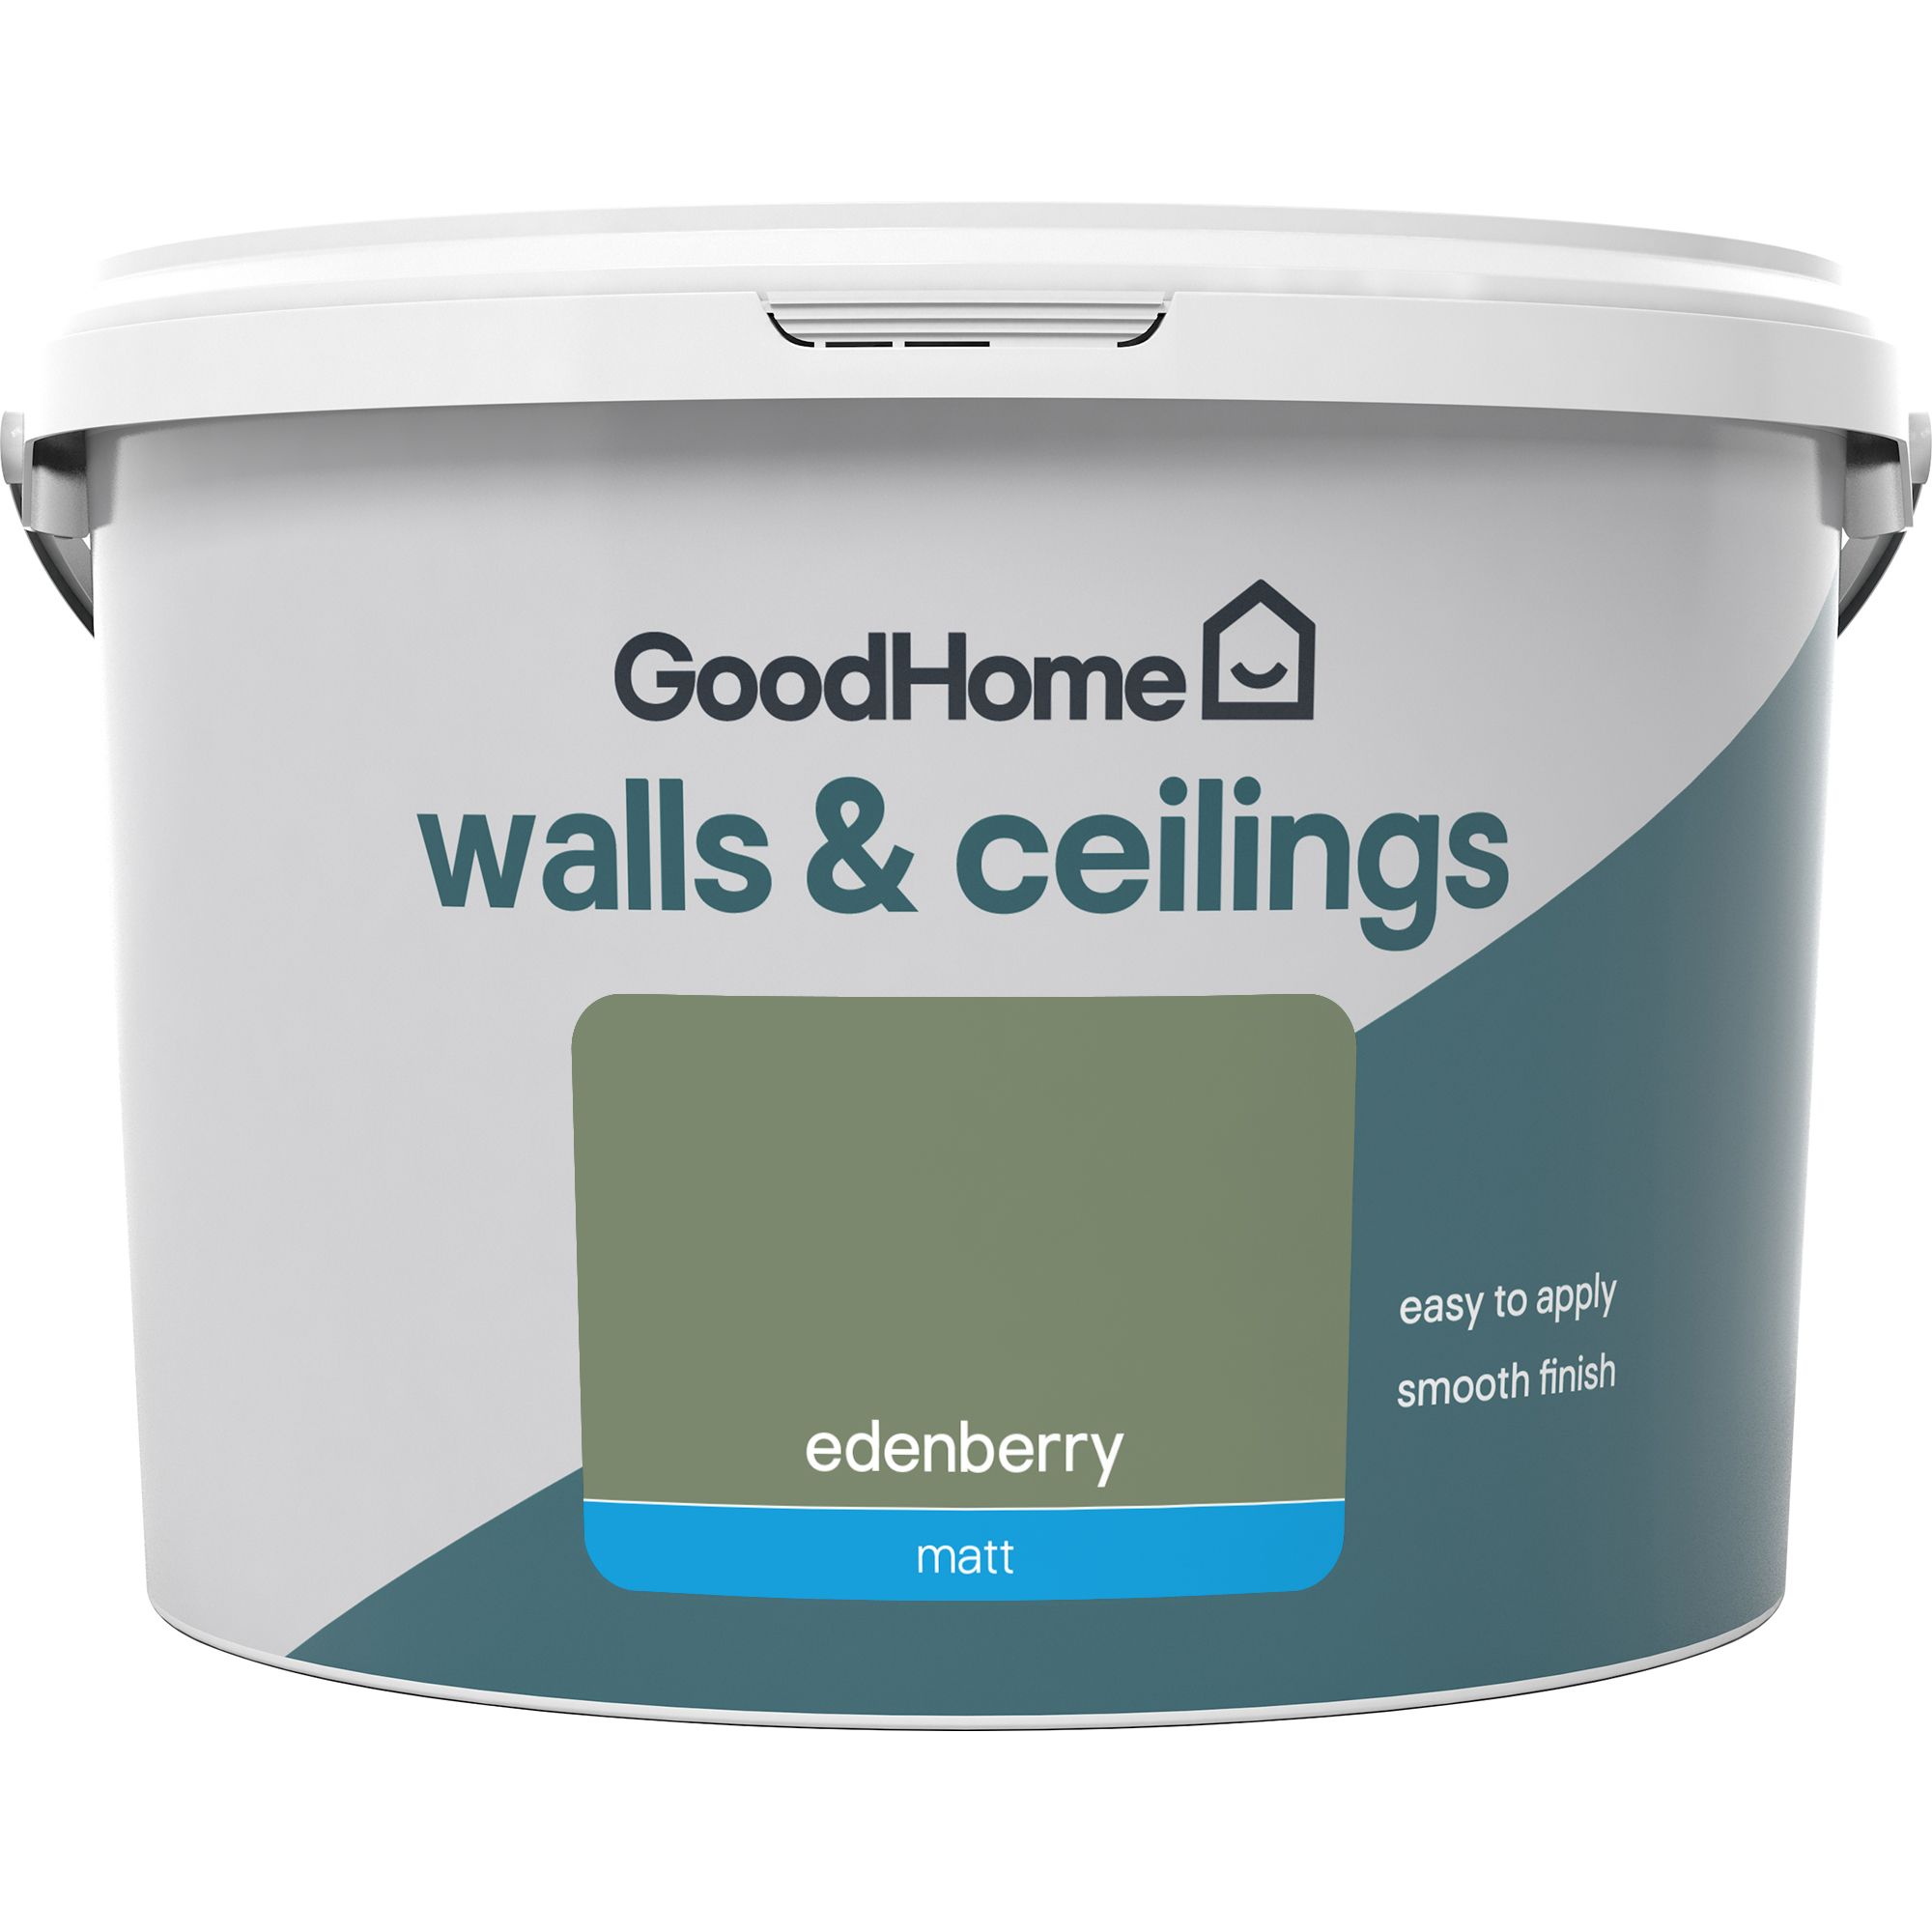 GoodHome Walls & ceilings Edenberry Matt Emulsion paint, 2.5L